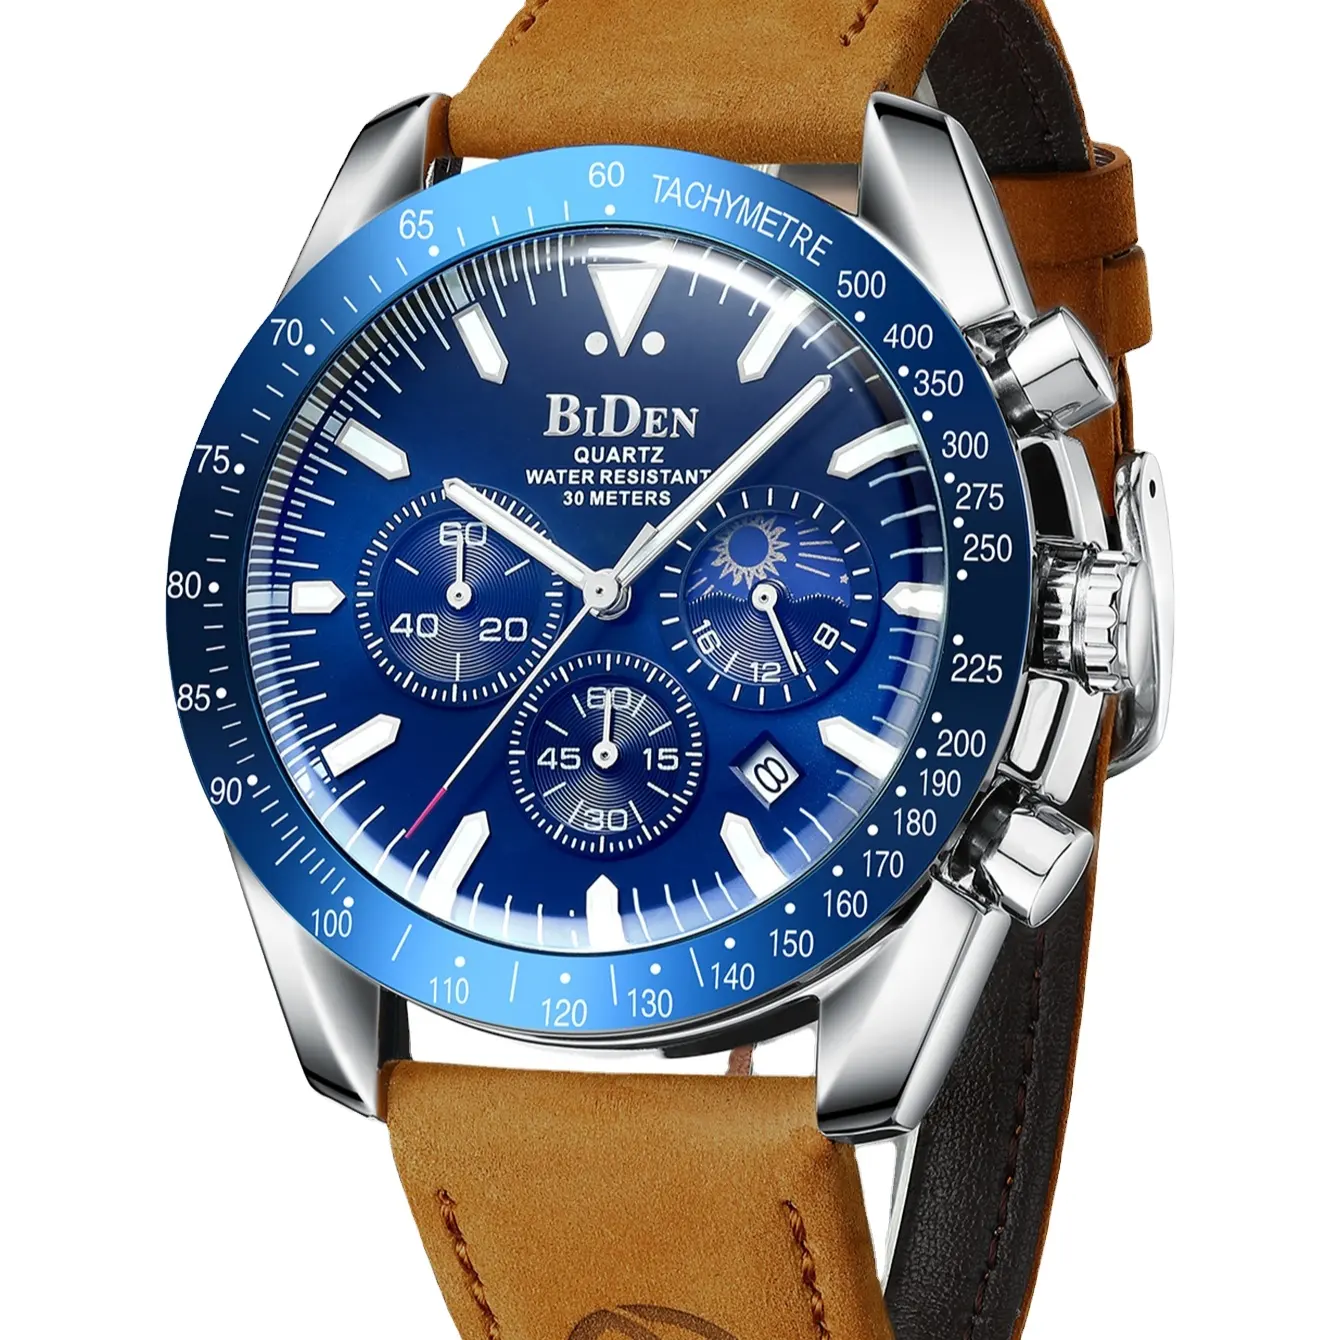 Biden 0344 Men's leather wristband quartz watch waterproof casual fashion business men's watch